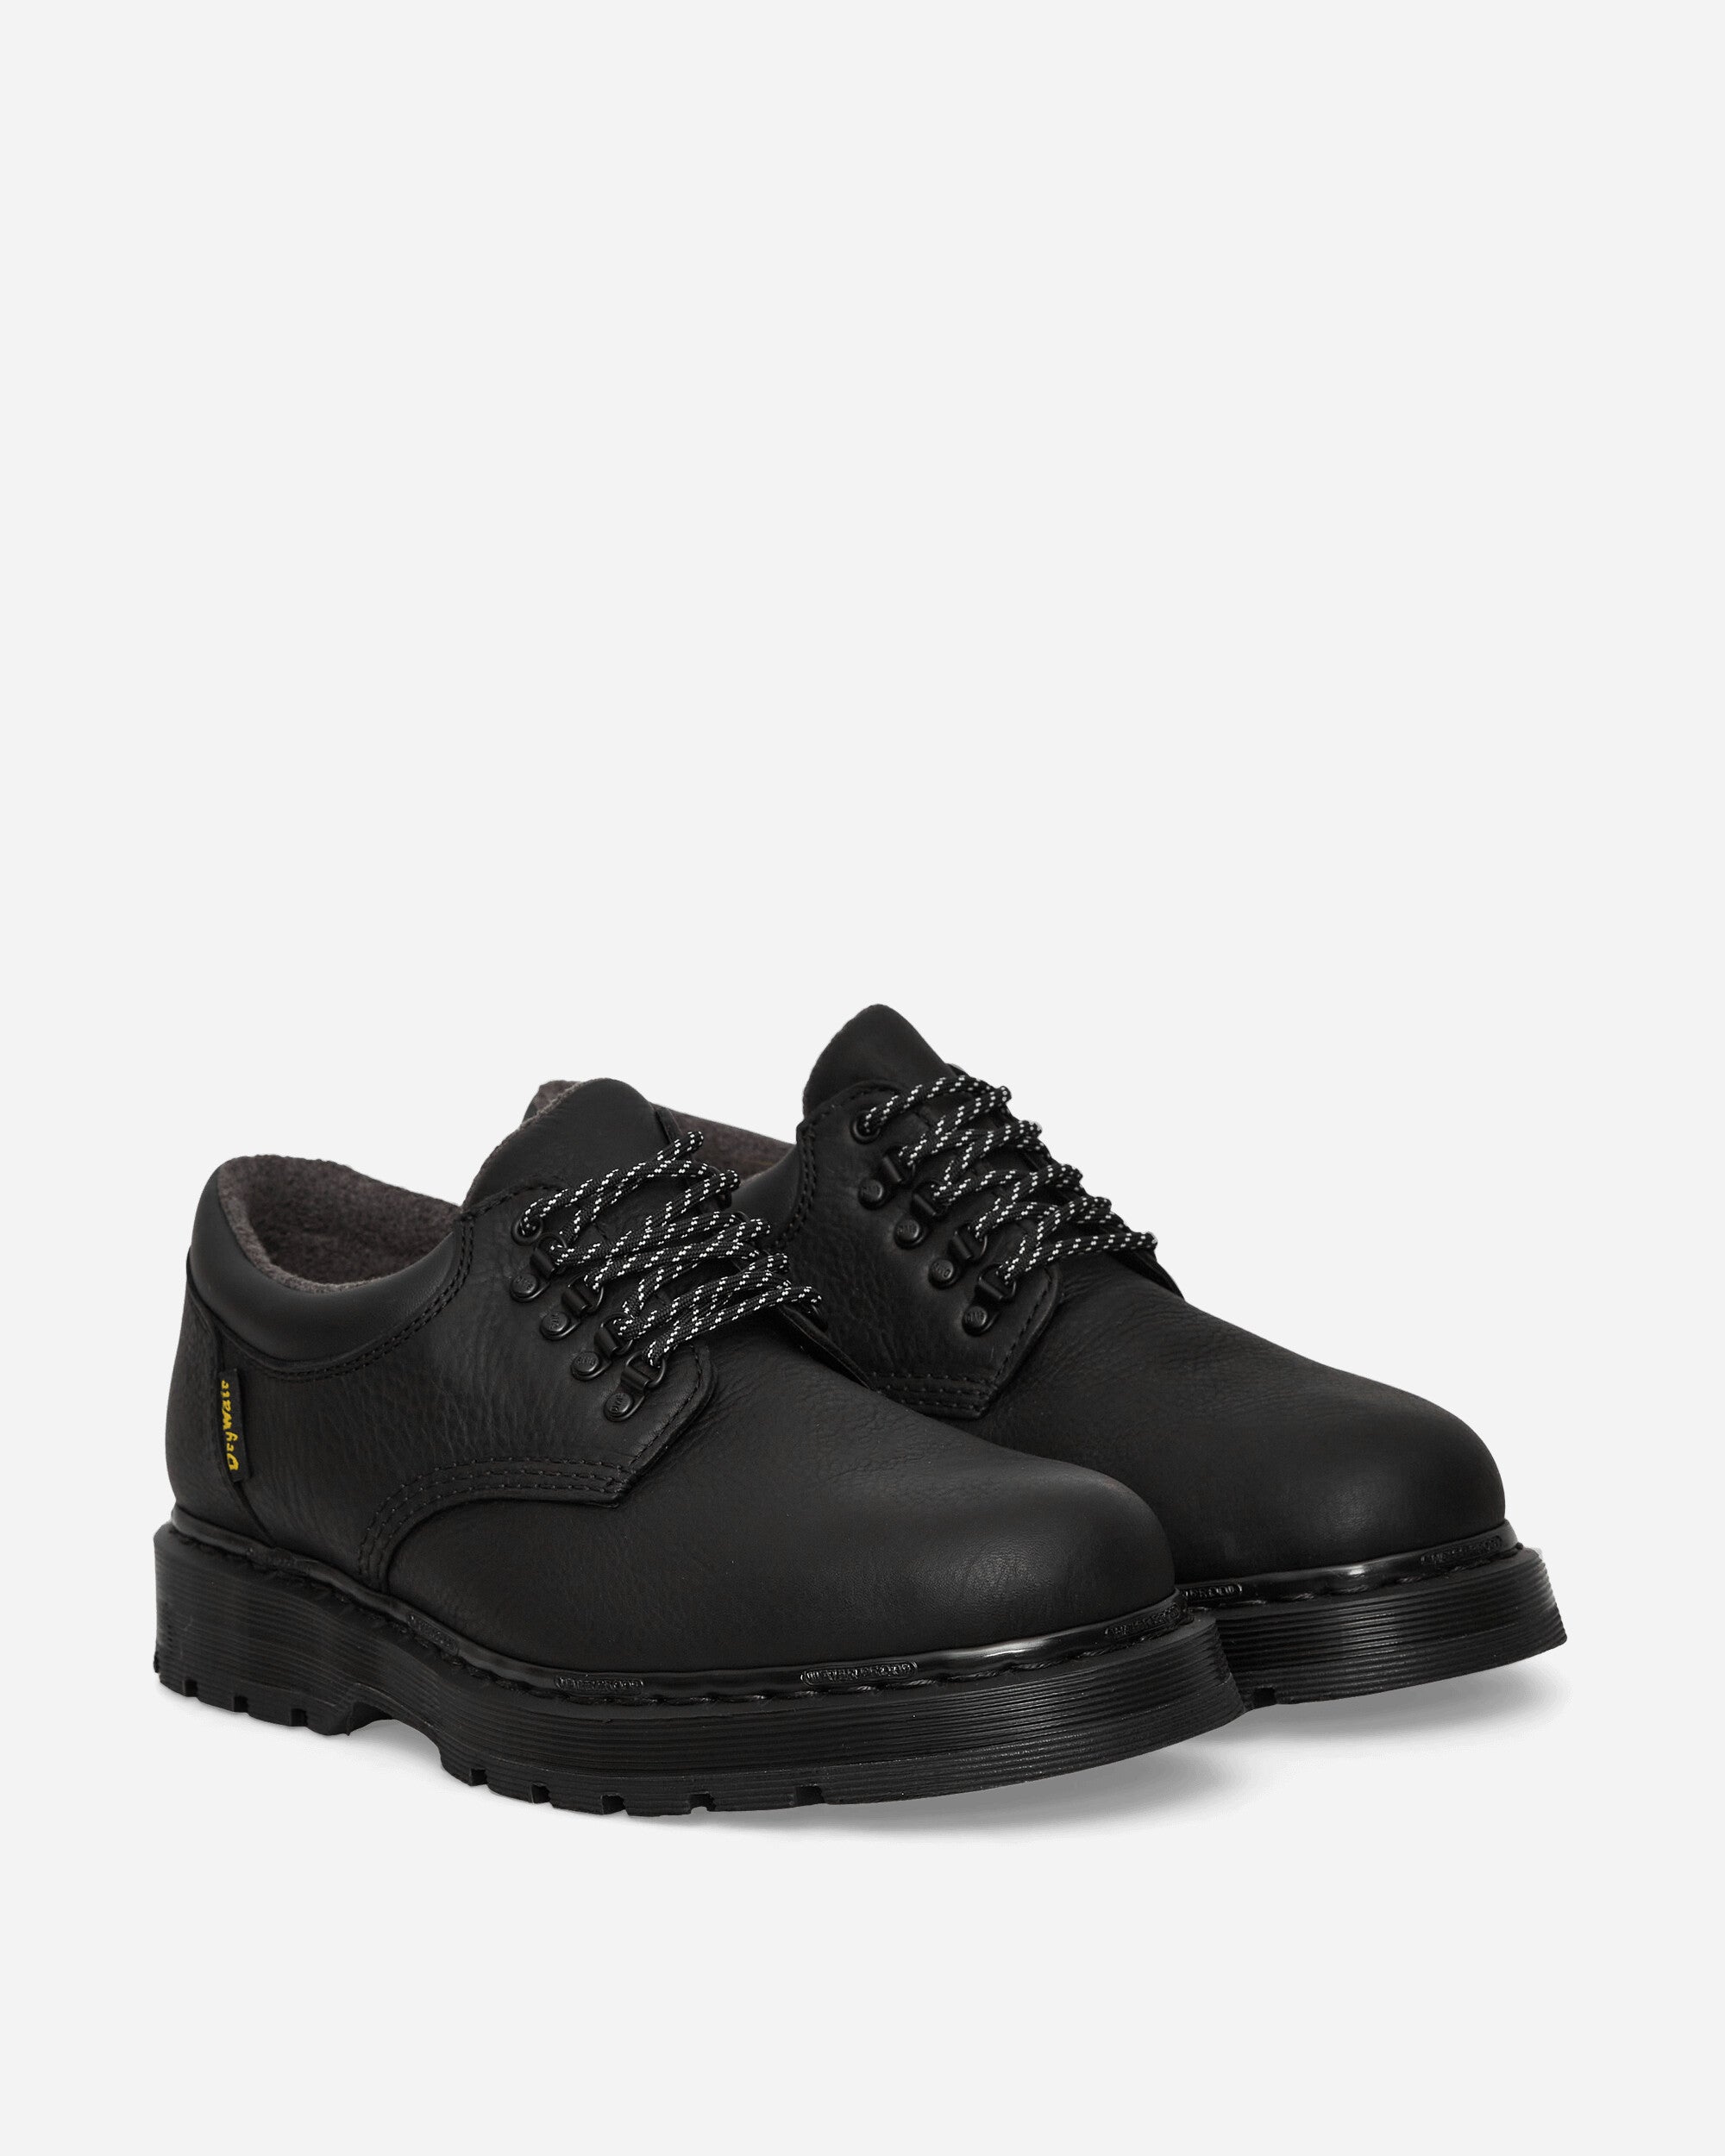 8053 Tailgate WP Shoes Black